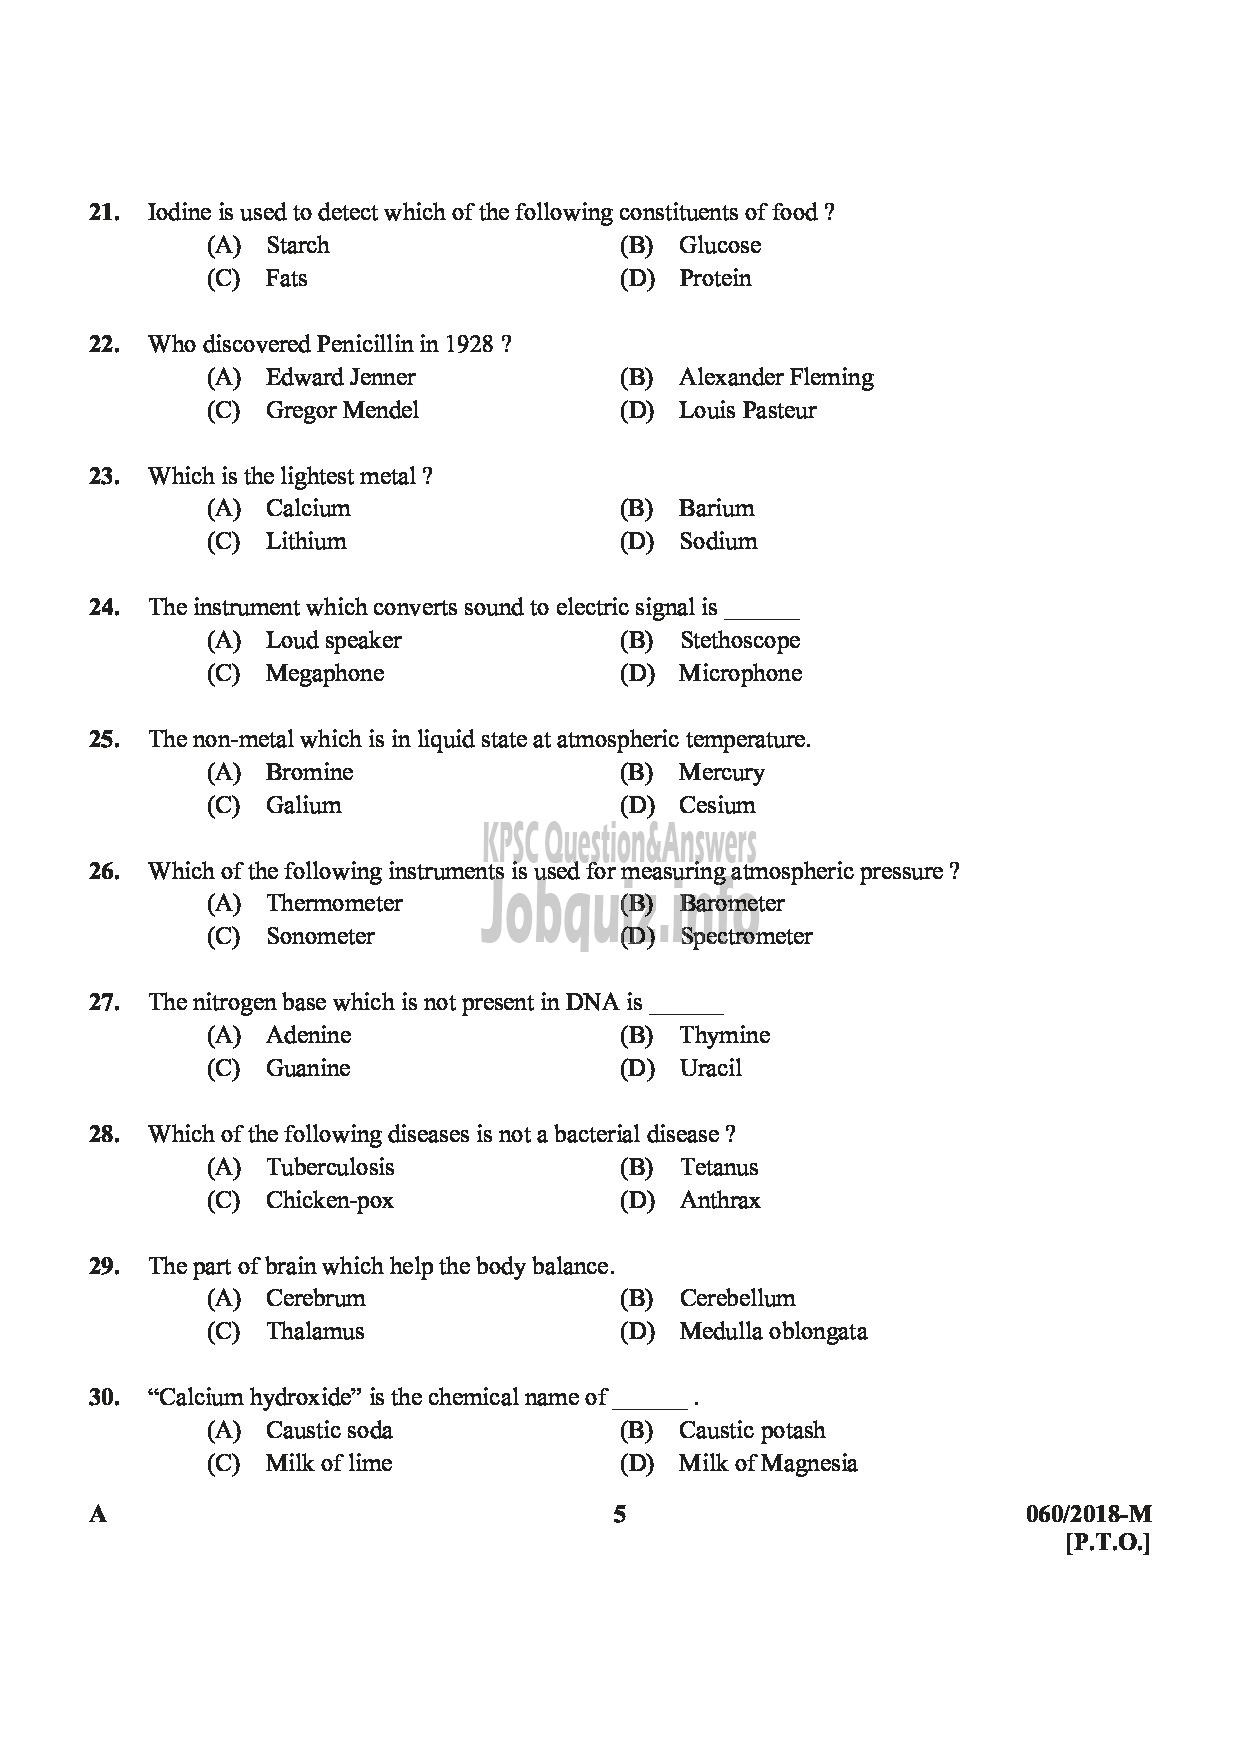 Kerala PSC Question Paper - JUNIOR ASSISTANT / CASHIER / ASSISTANT GRADE II / CLERK GR I KSFE LTD / KSEB LTD / KSRTC / FOAM MATTINGS ETC ENGLISH / MALAYALAM-5